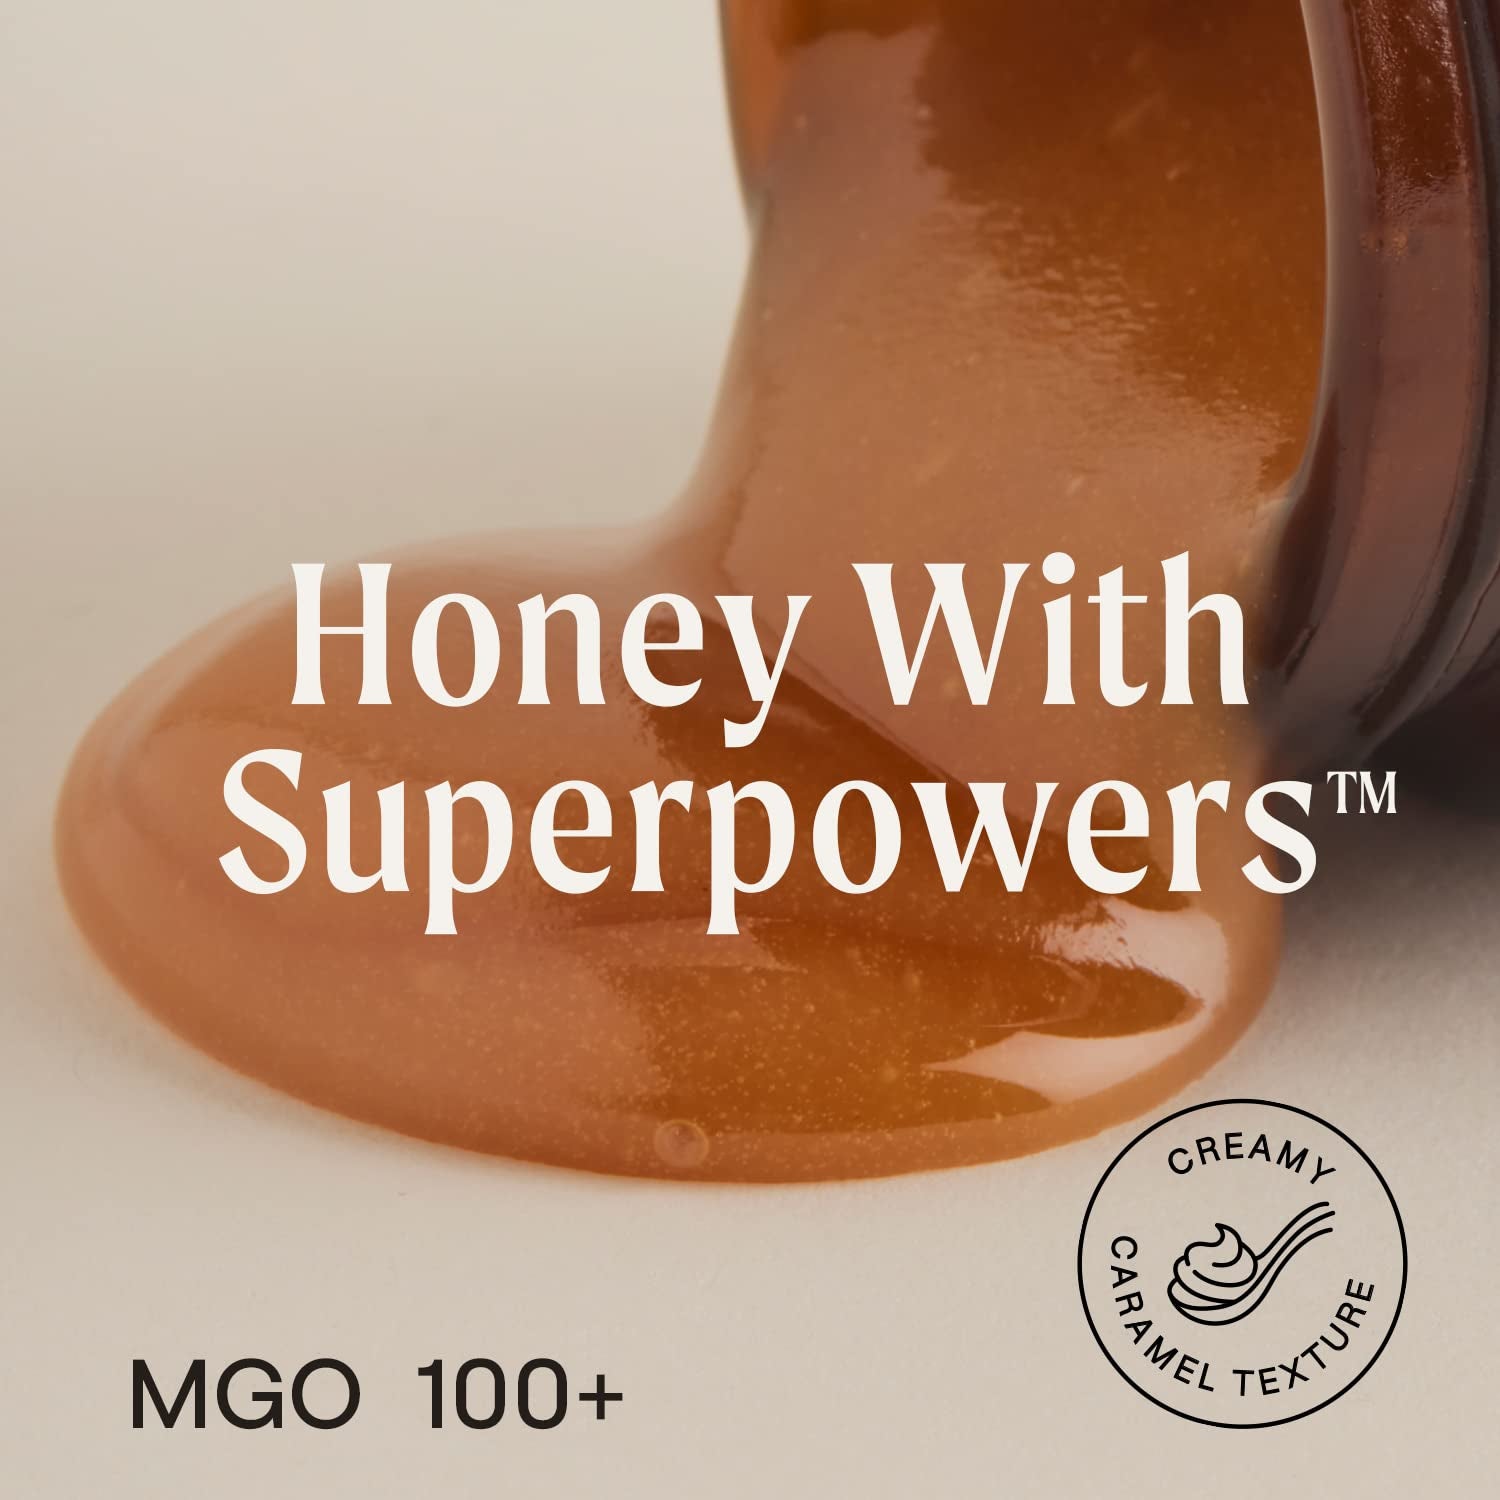 Manukora Raw Manuka Honey, MGO 100+, New Zealand Honey, Non-Gmo, Traceable from Hive to Hand, Daily Wellness Support - 500G (1.1 Lb)